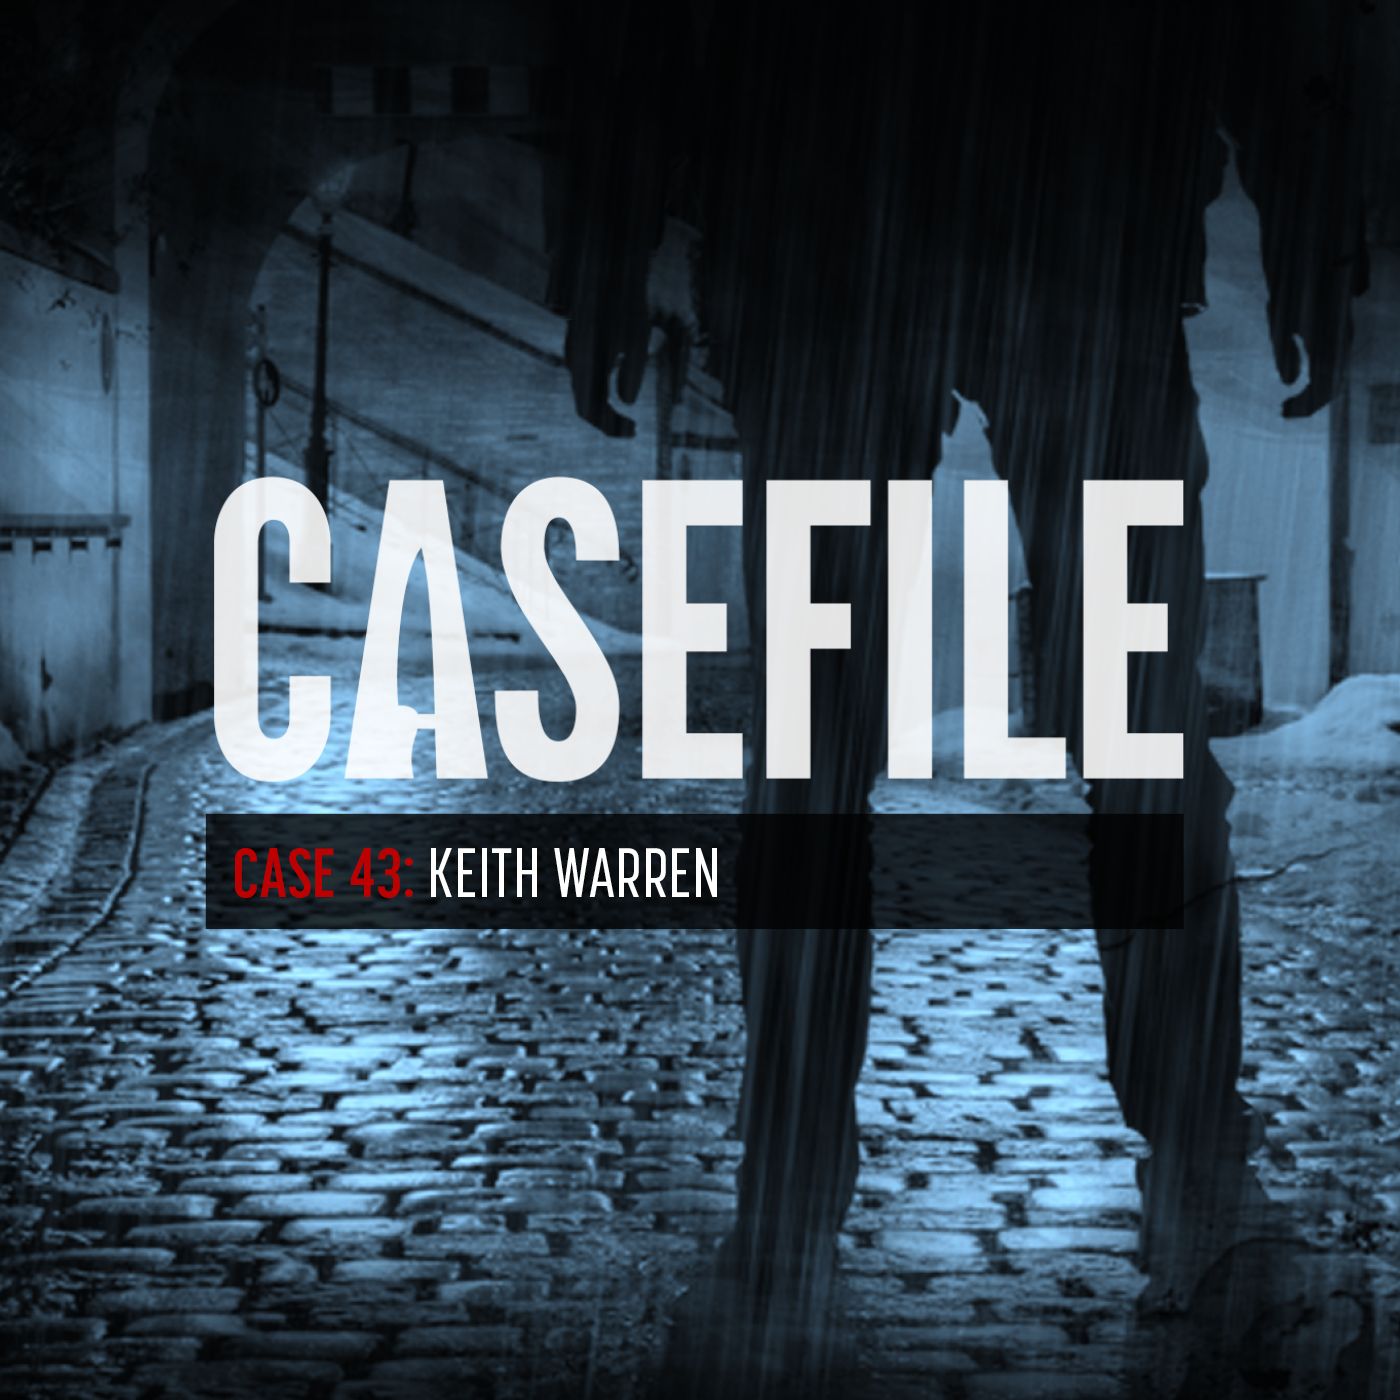 Case 43: Keith Warren